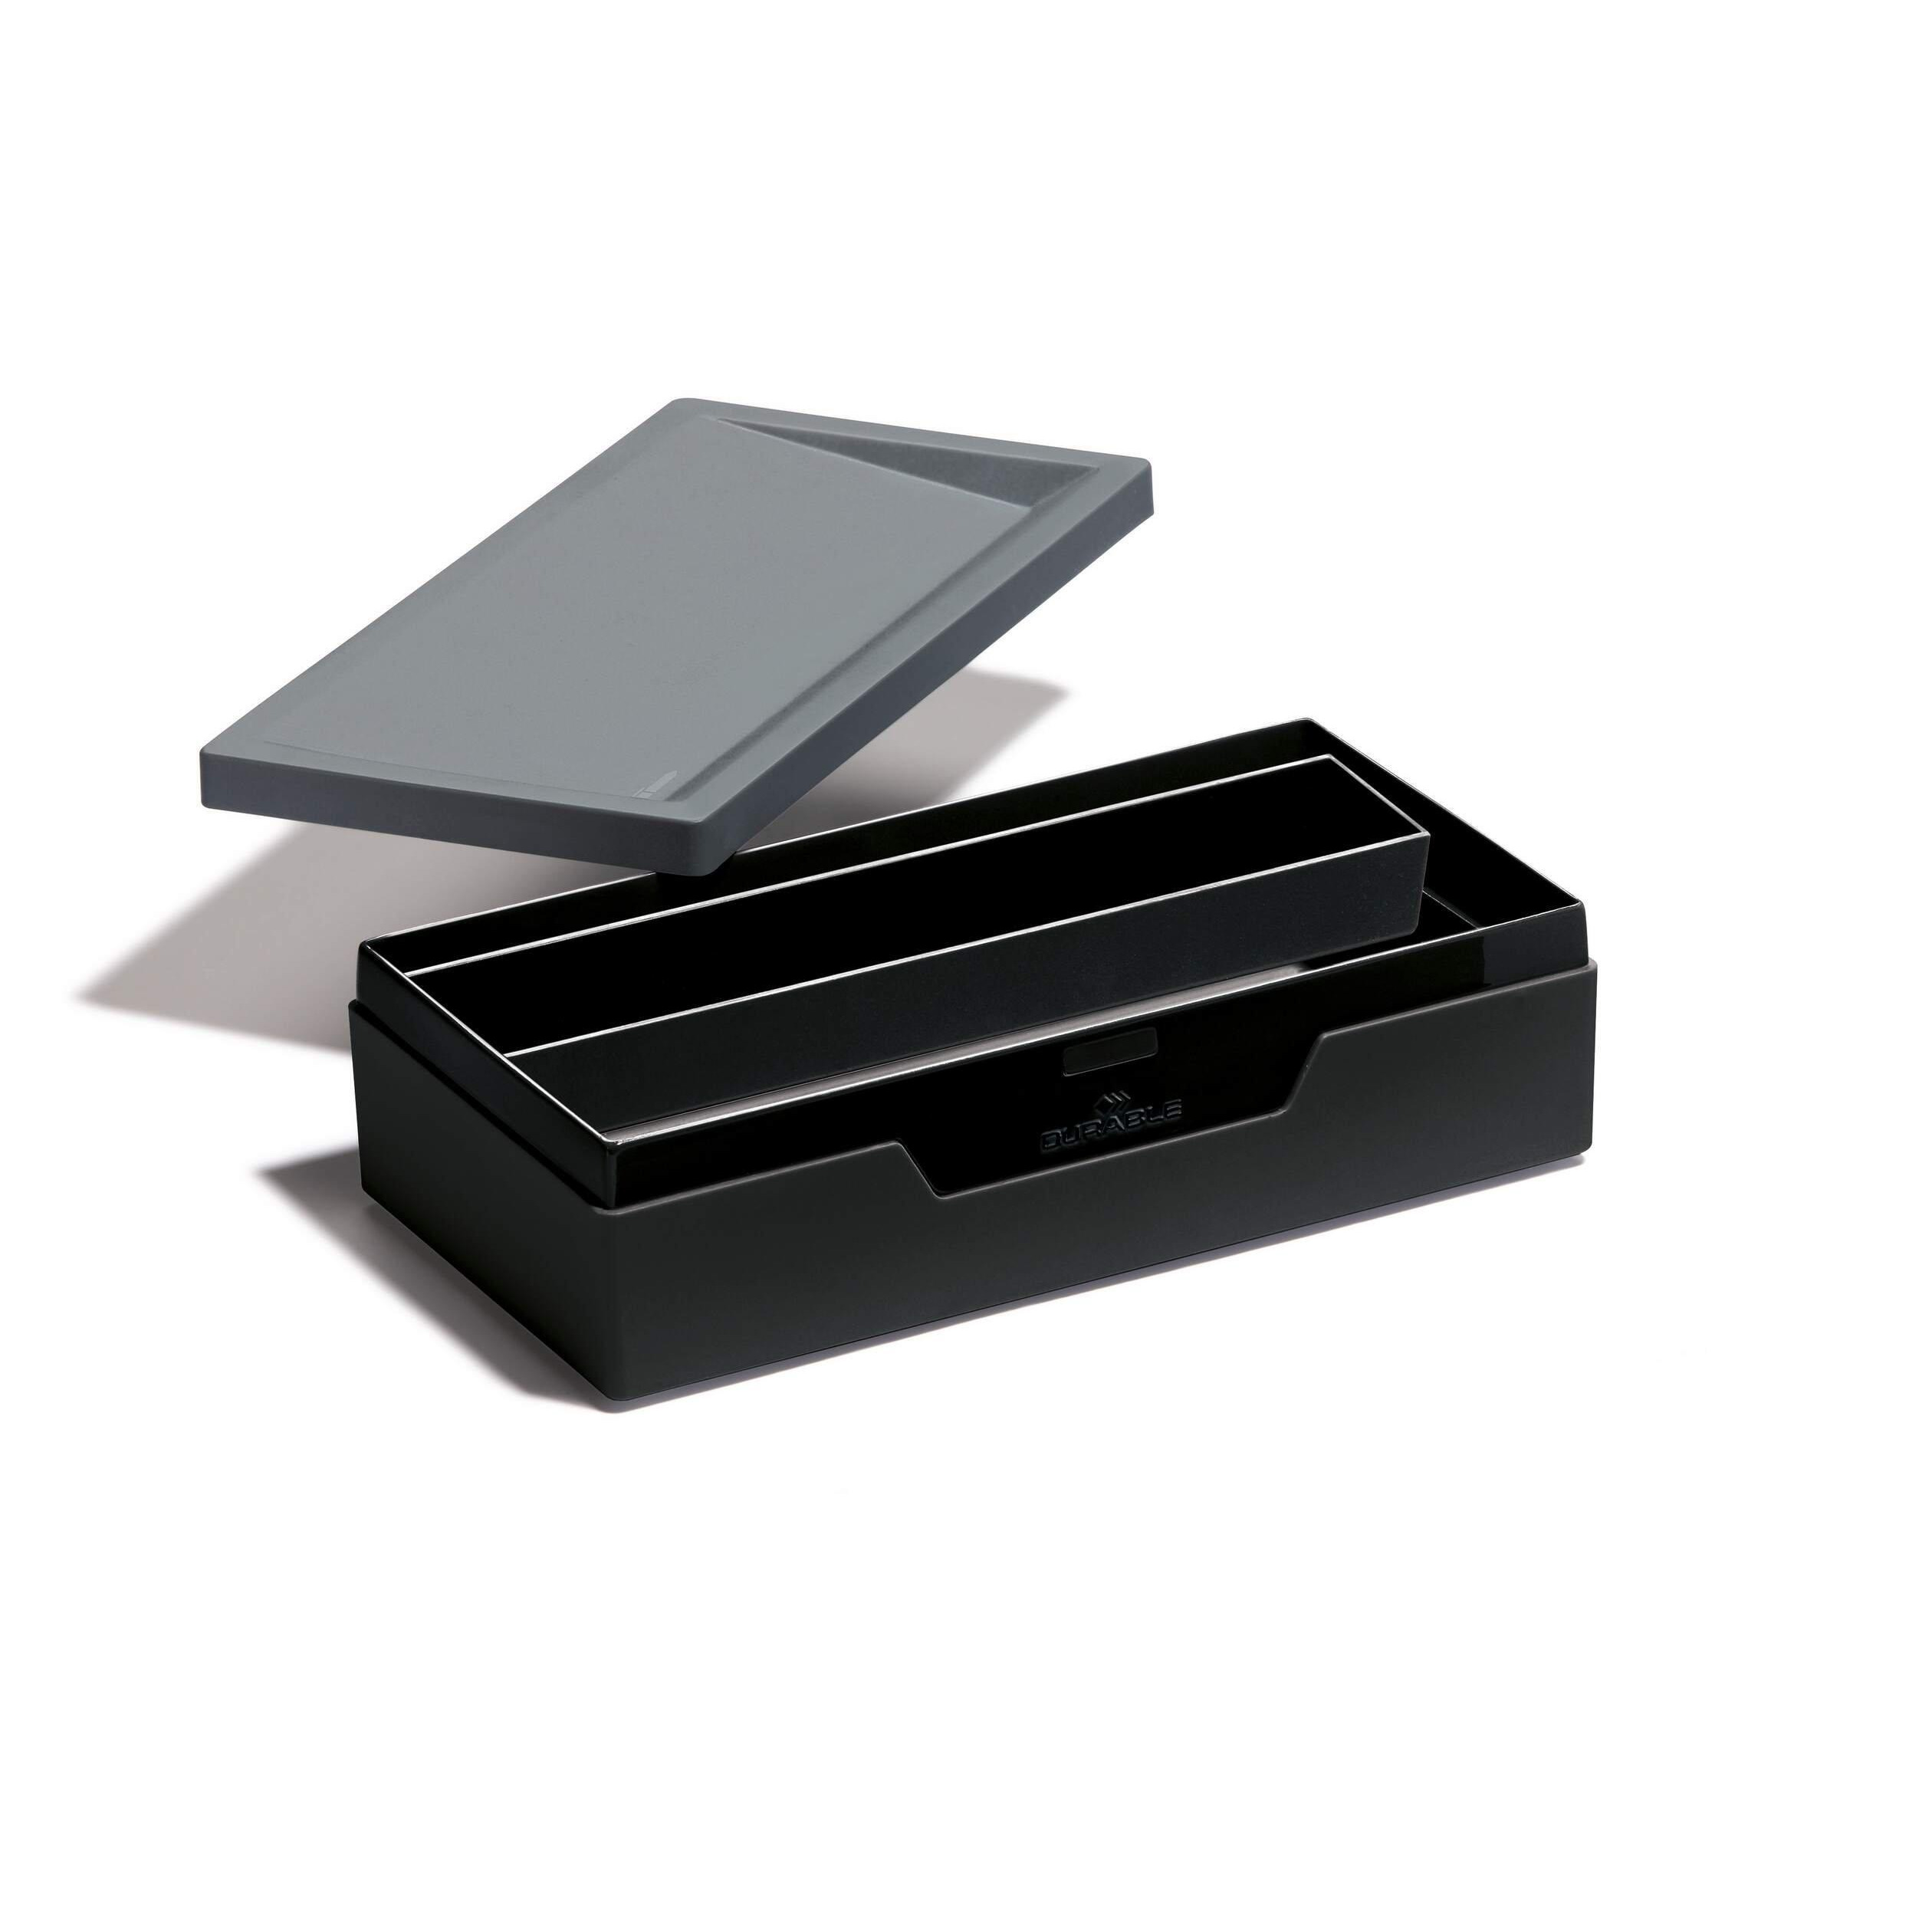 VARICOLOR Stationary Organiser Case Pen Pencil Desk Storage Box - Grey - image 1